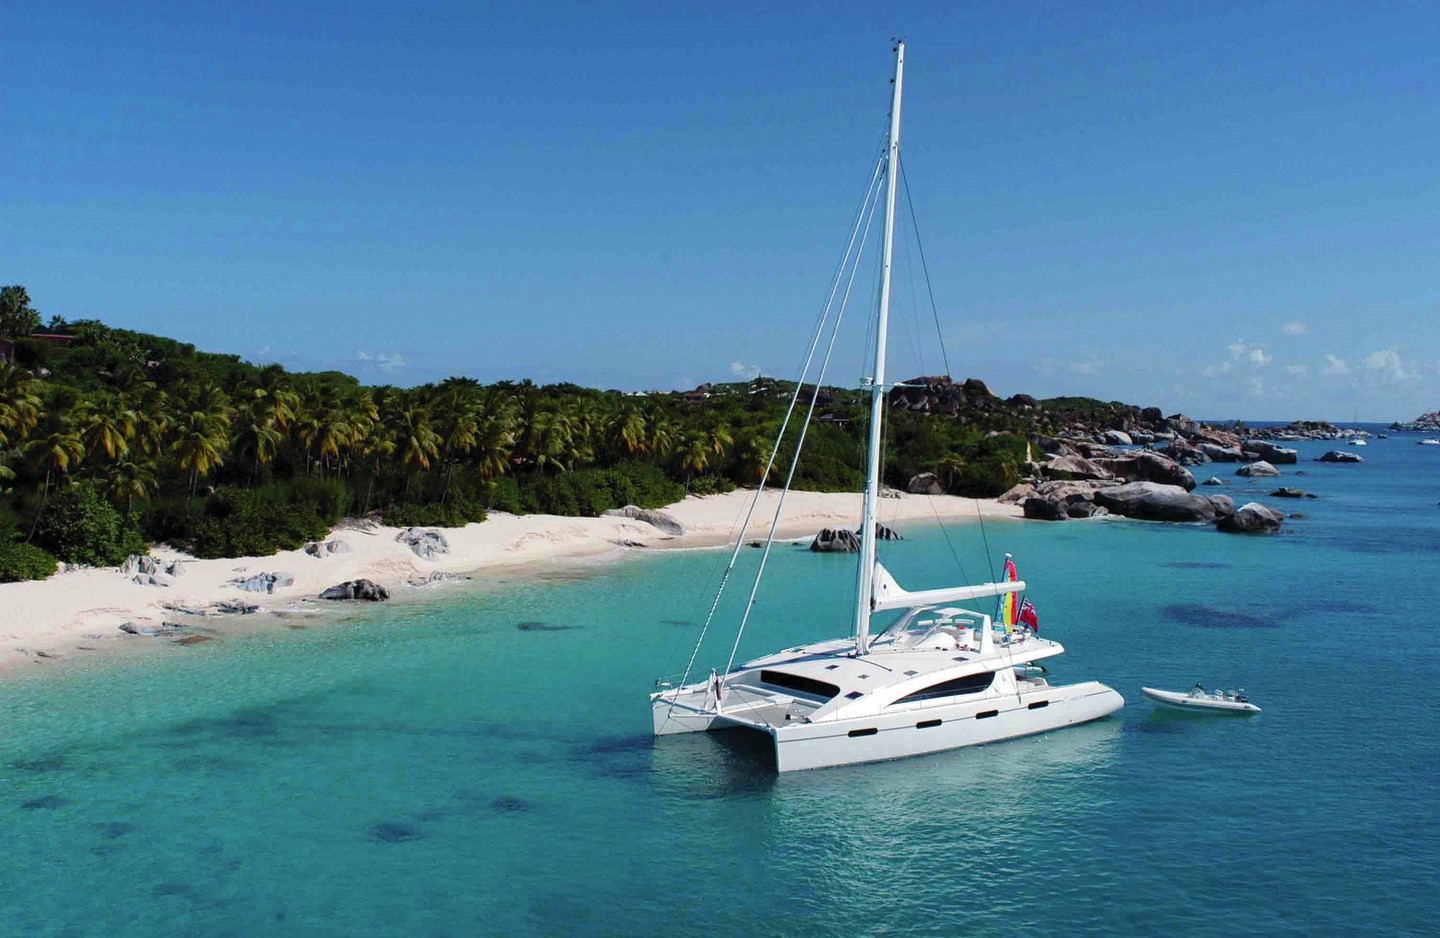 Isole Vergini Britanniche: yachting indimenticabile nei Caraibi!